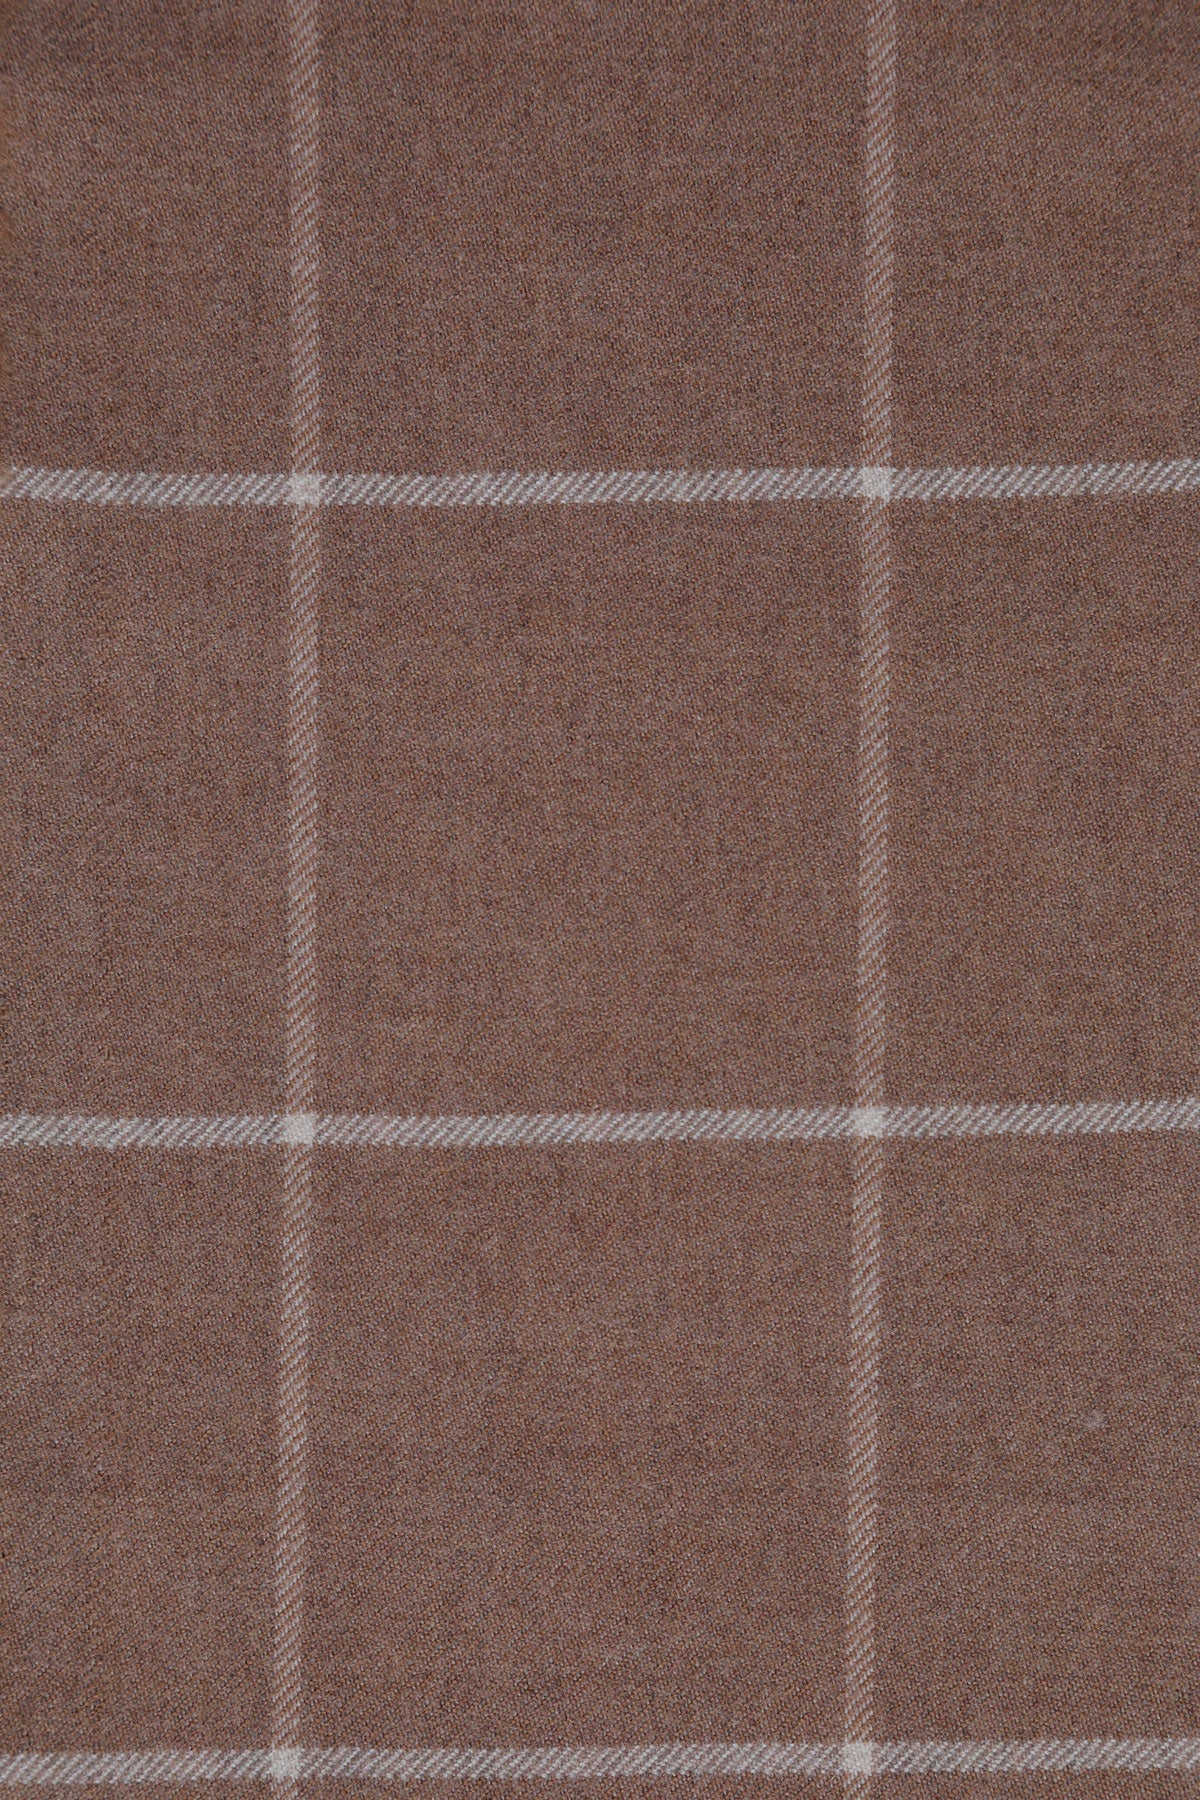 Seren Extra Fine Merino Wool Fabric in Henna 694424172